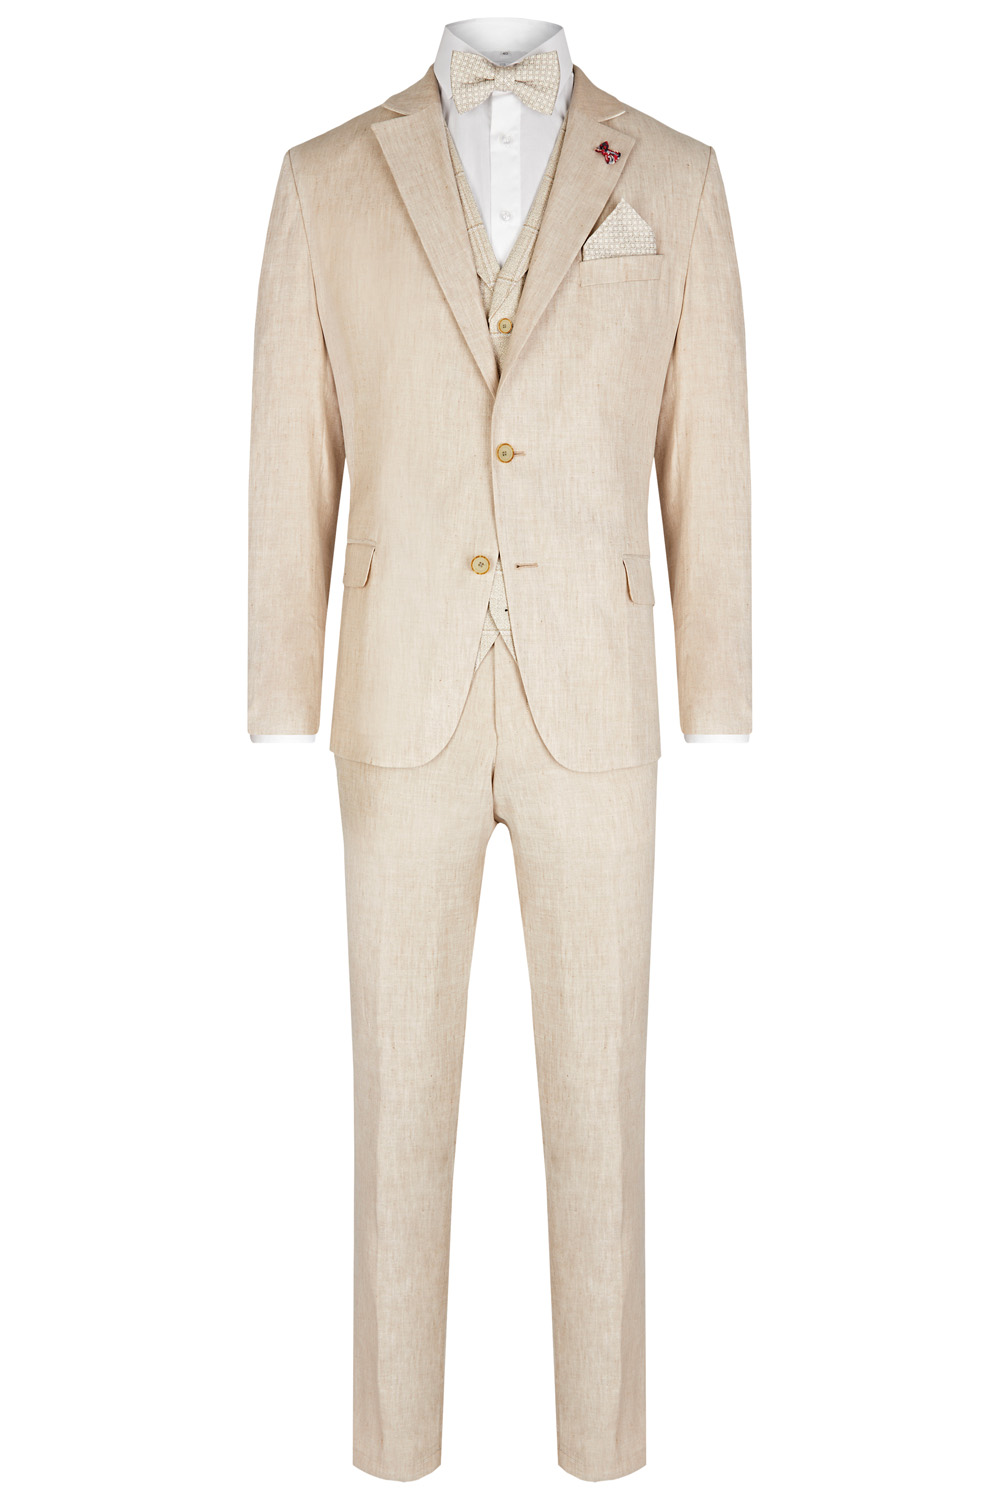 Beige Vintage 3 Piece Wedding Suit - Tom Murphy's Formal and Menswear